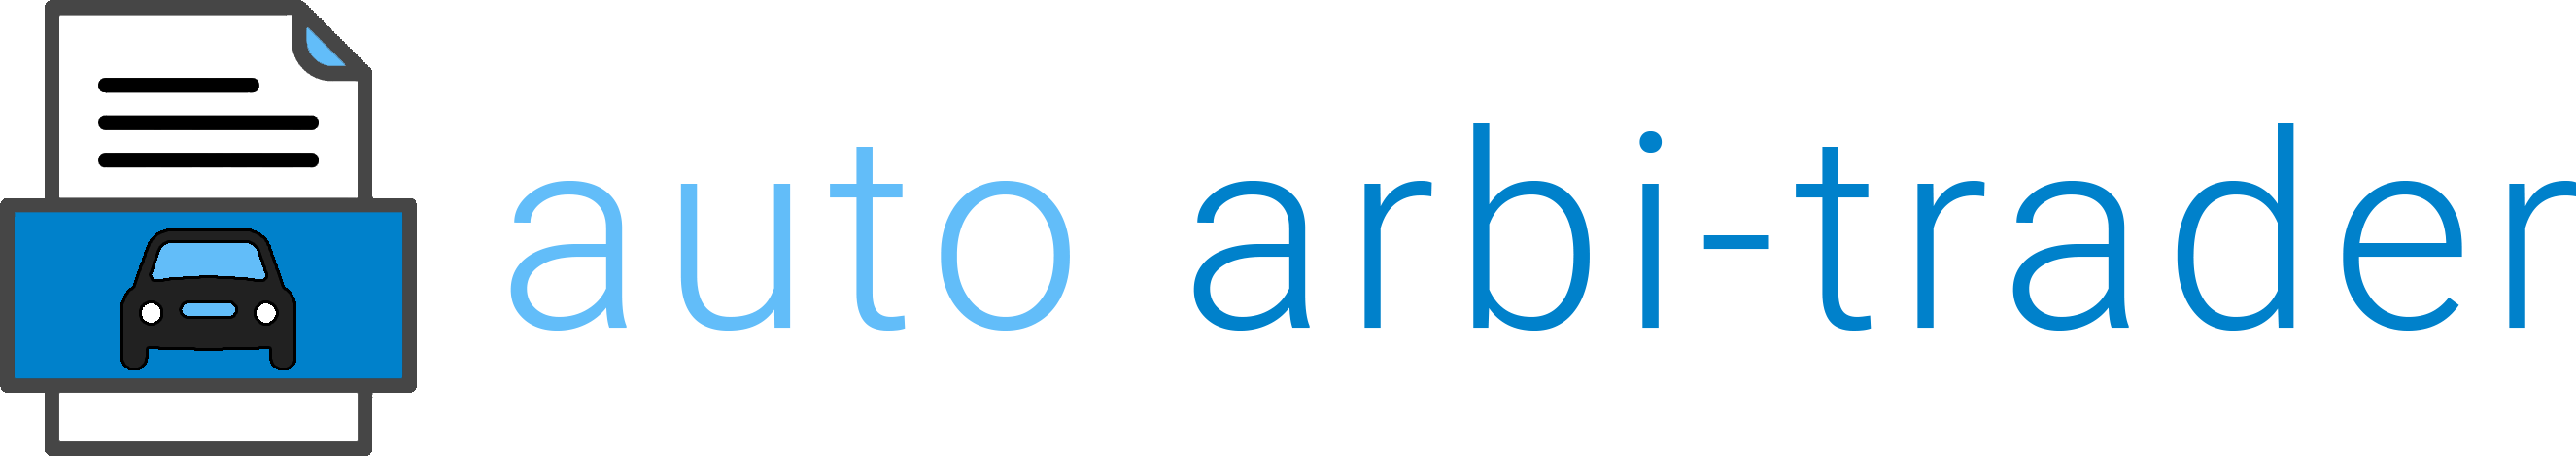 Auto Arbitrader Logo